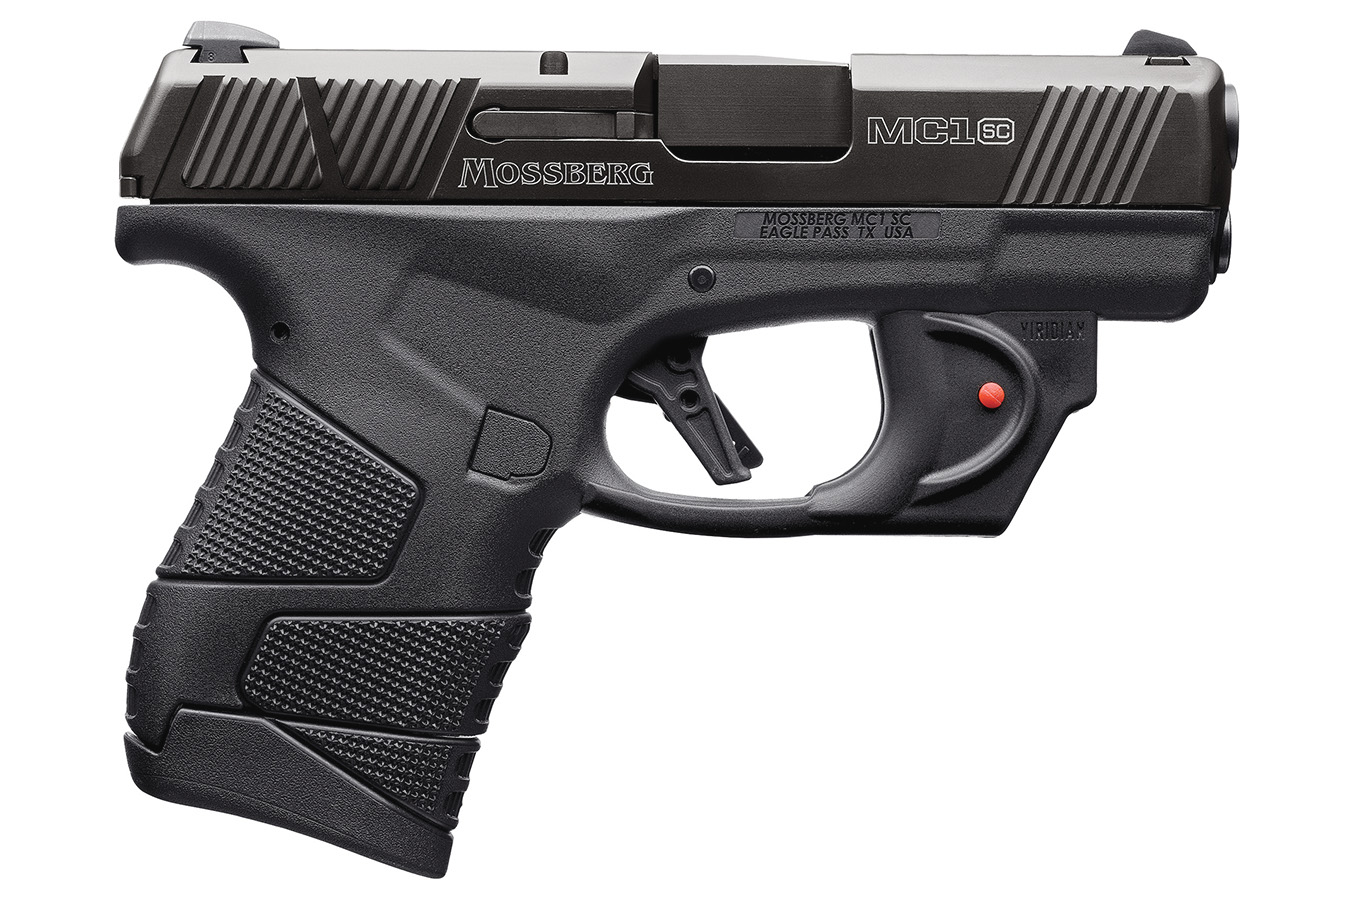 mossberg-mc1sc-9mm-subcompact-striker-fired-pistol-with-viridian-laser